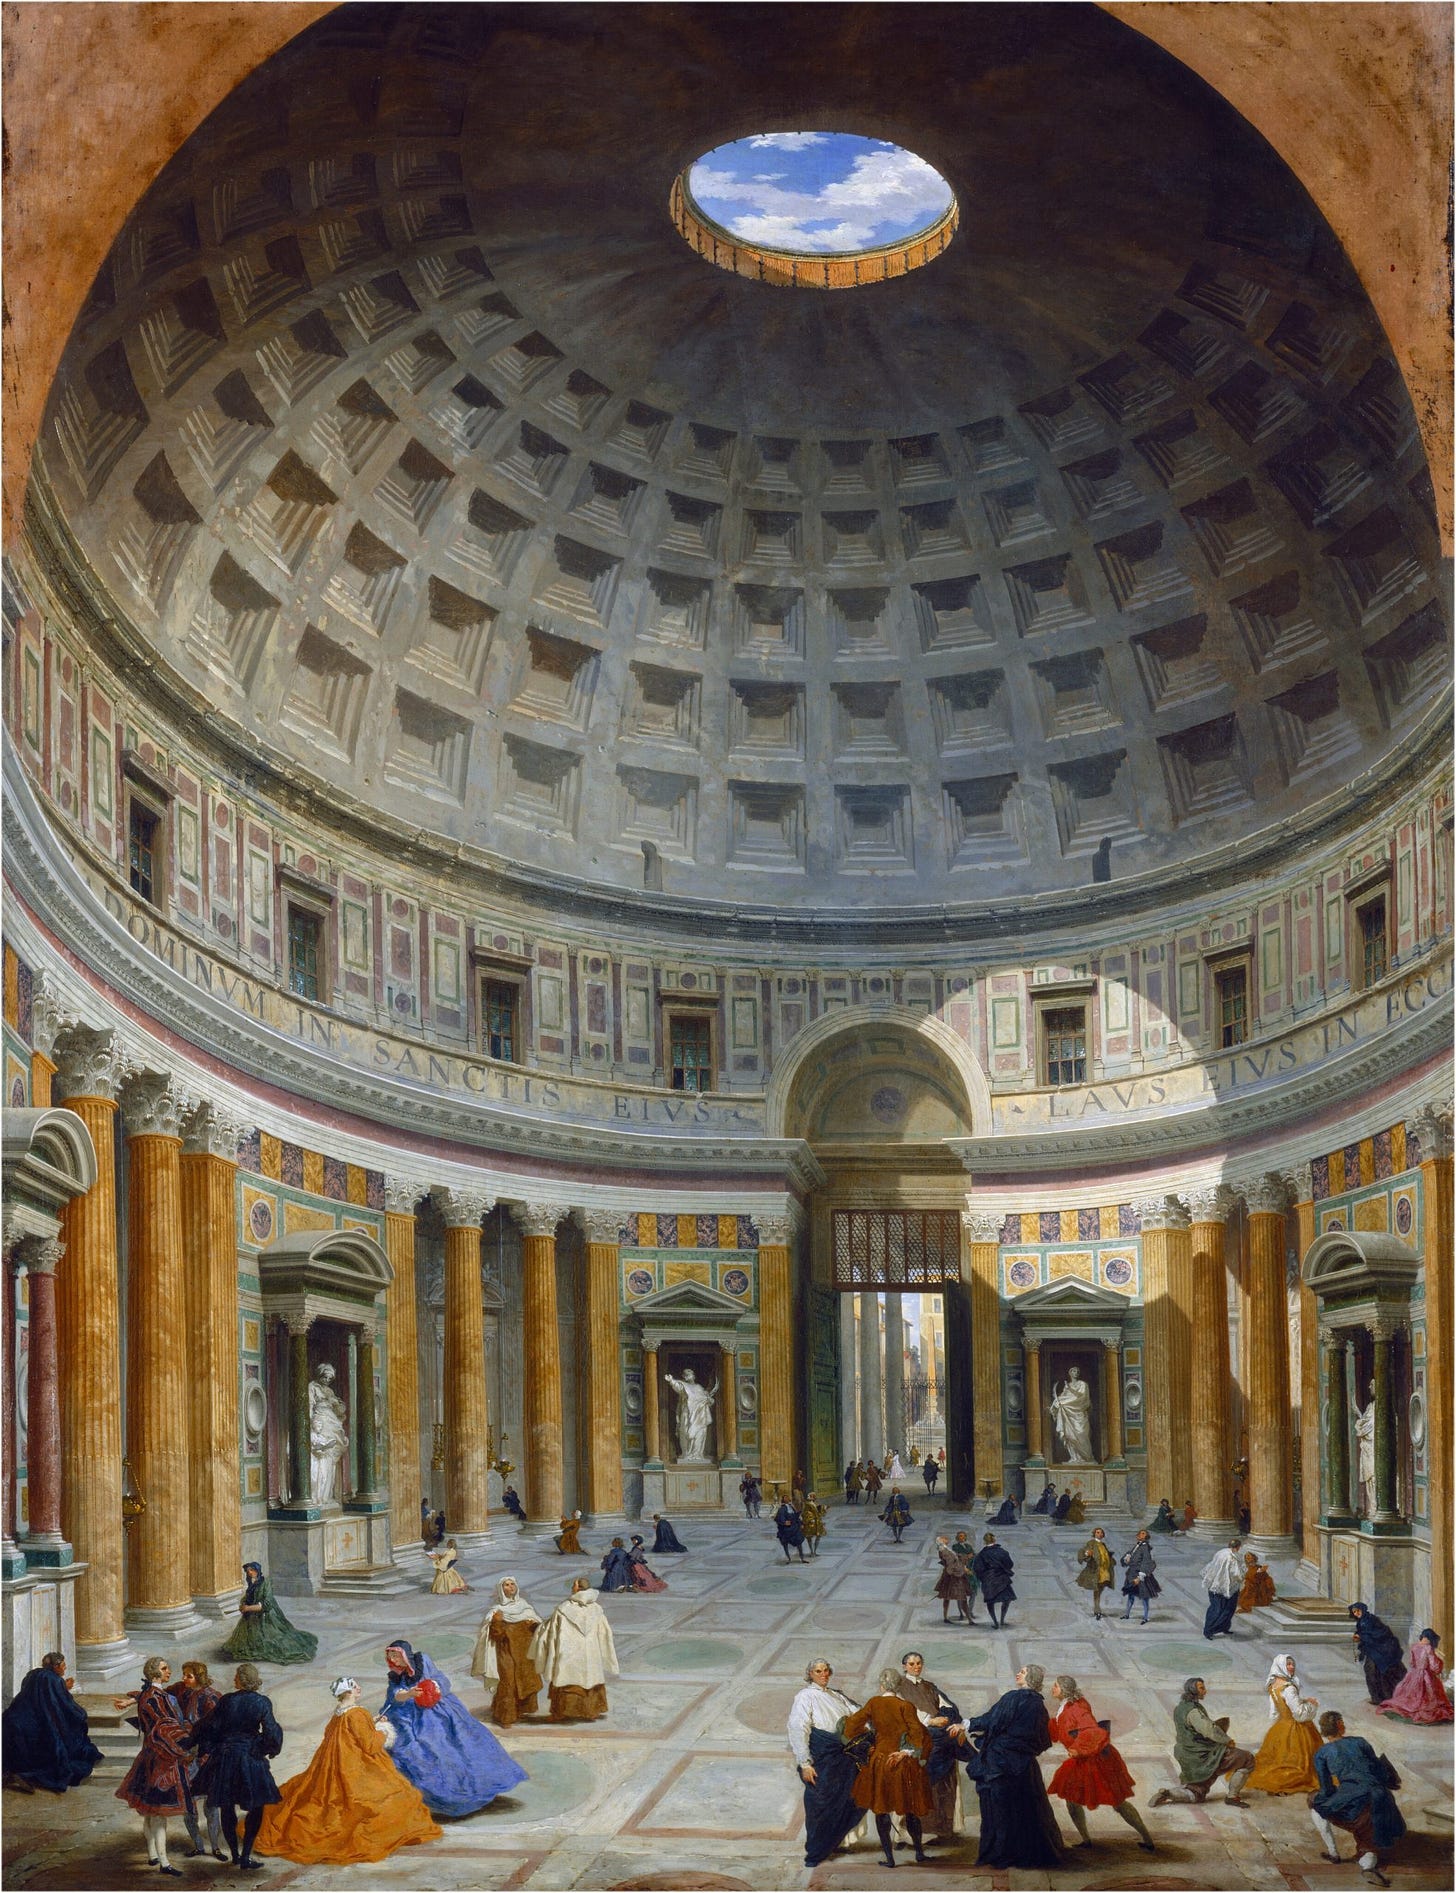 The Pantheon (Rome)